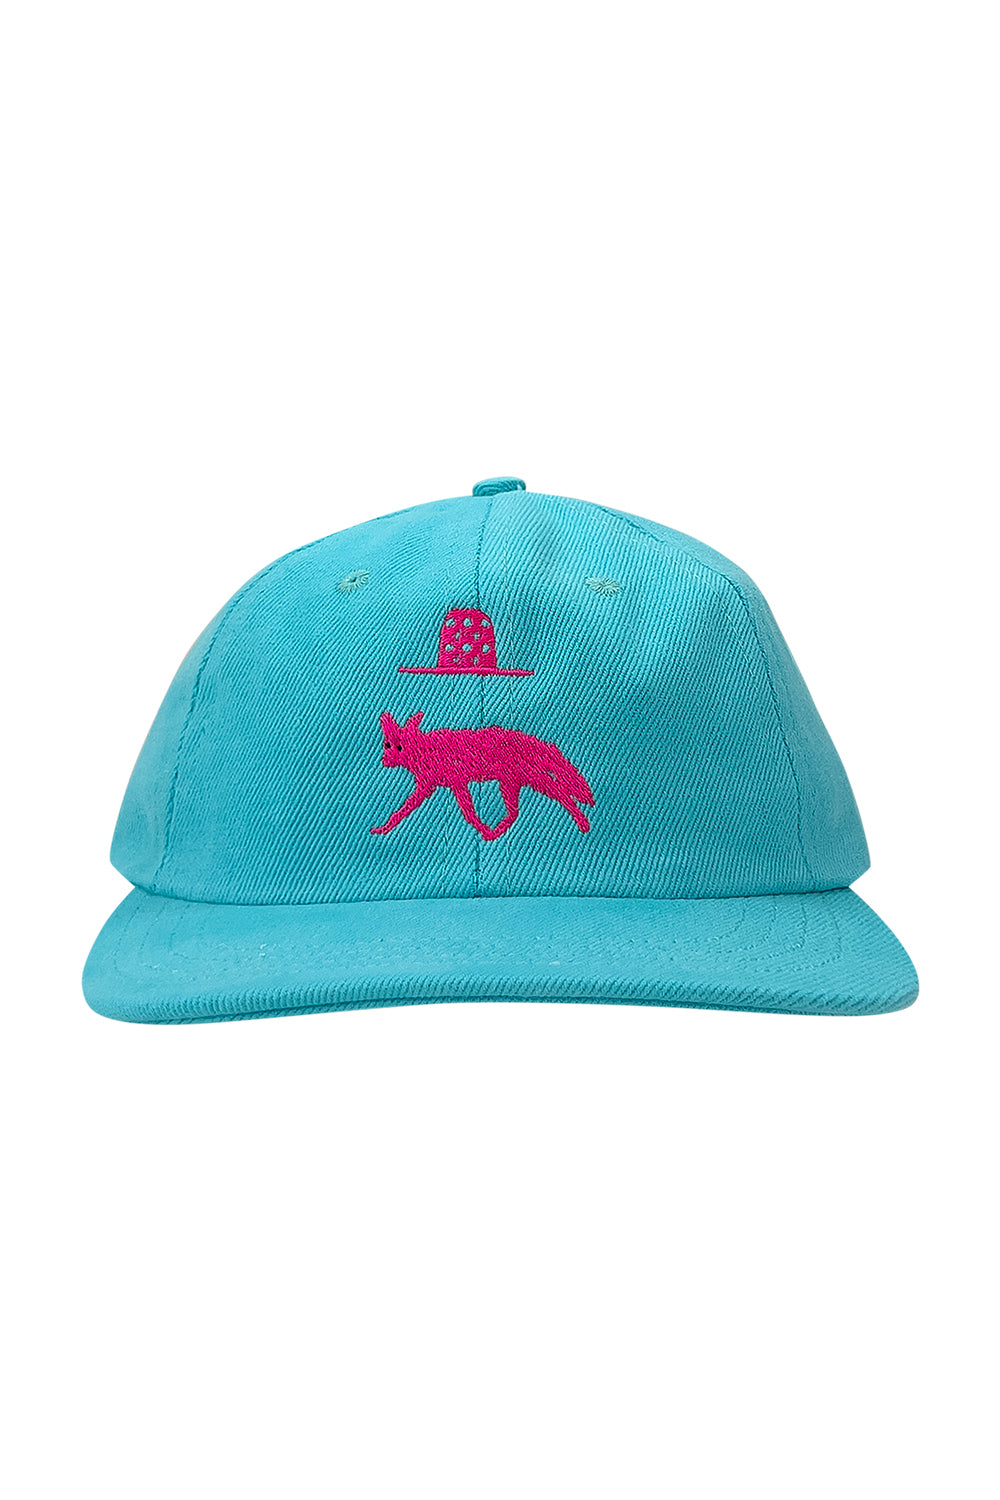 Coyote Twill Cap | Jungmaven Hemp Clothing & Accessories / Color: Caribbean Blue